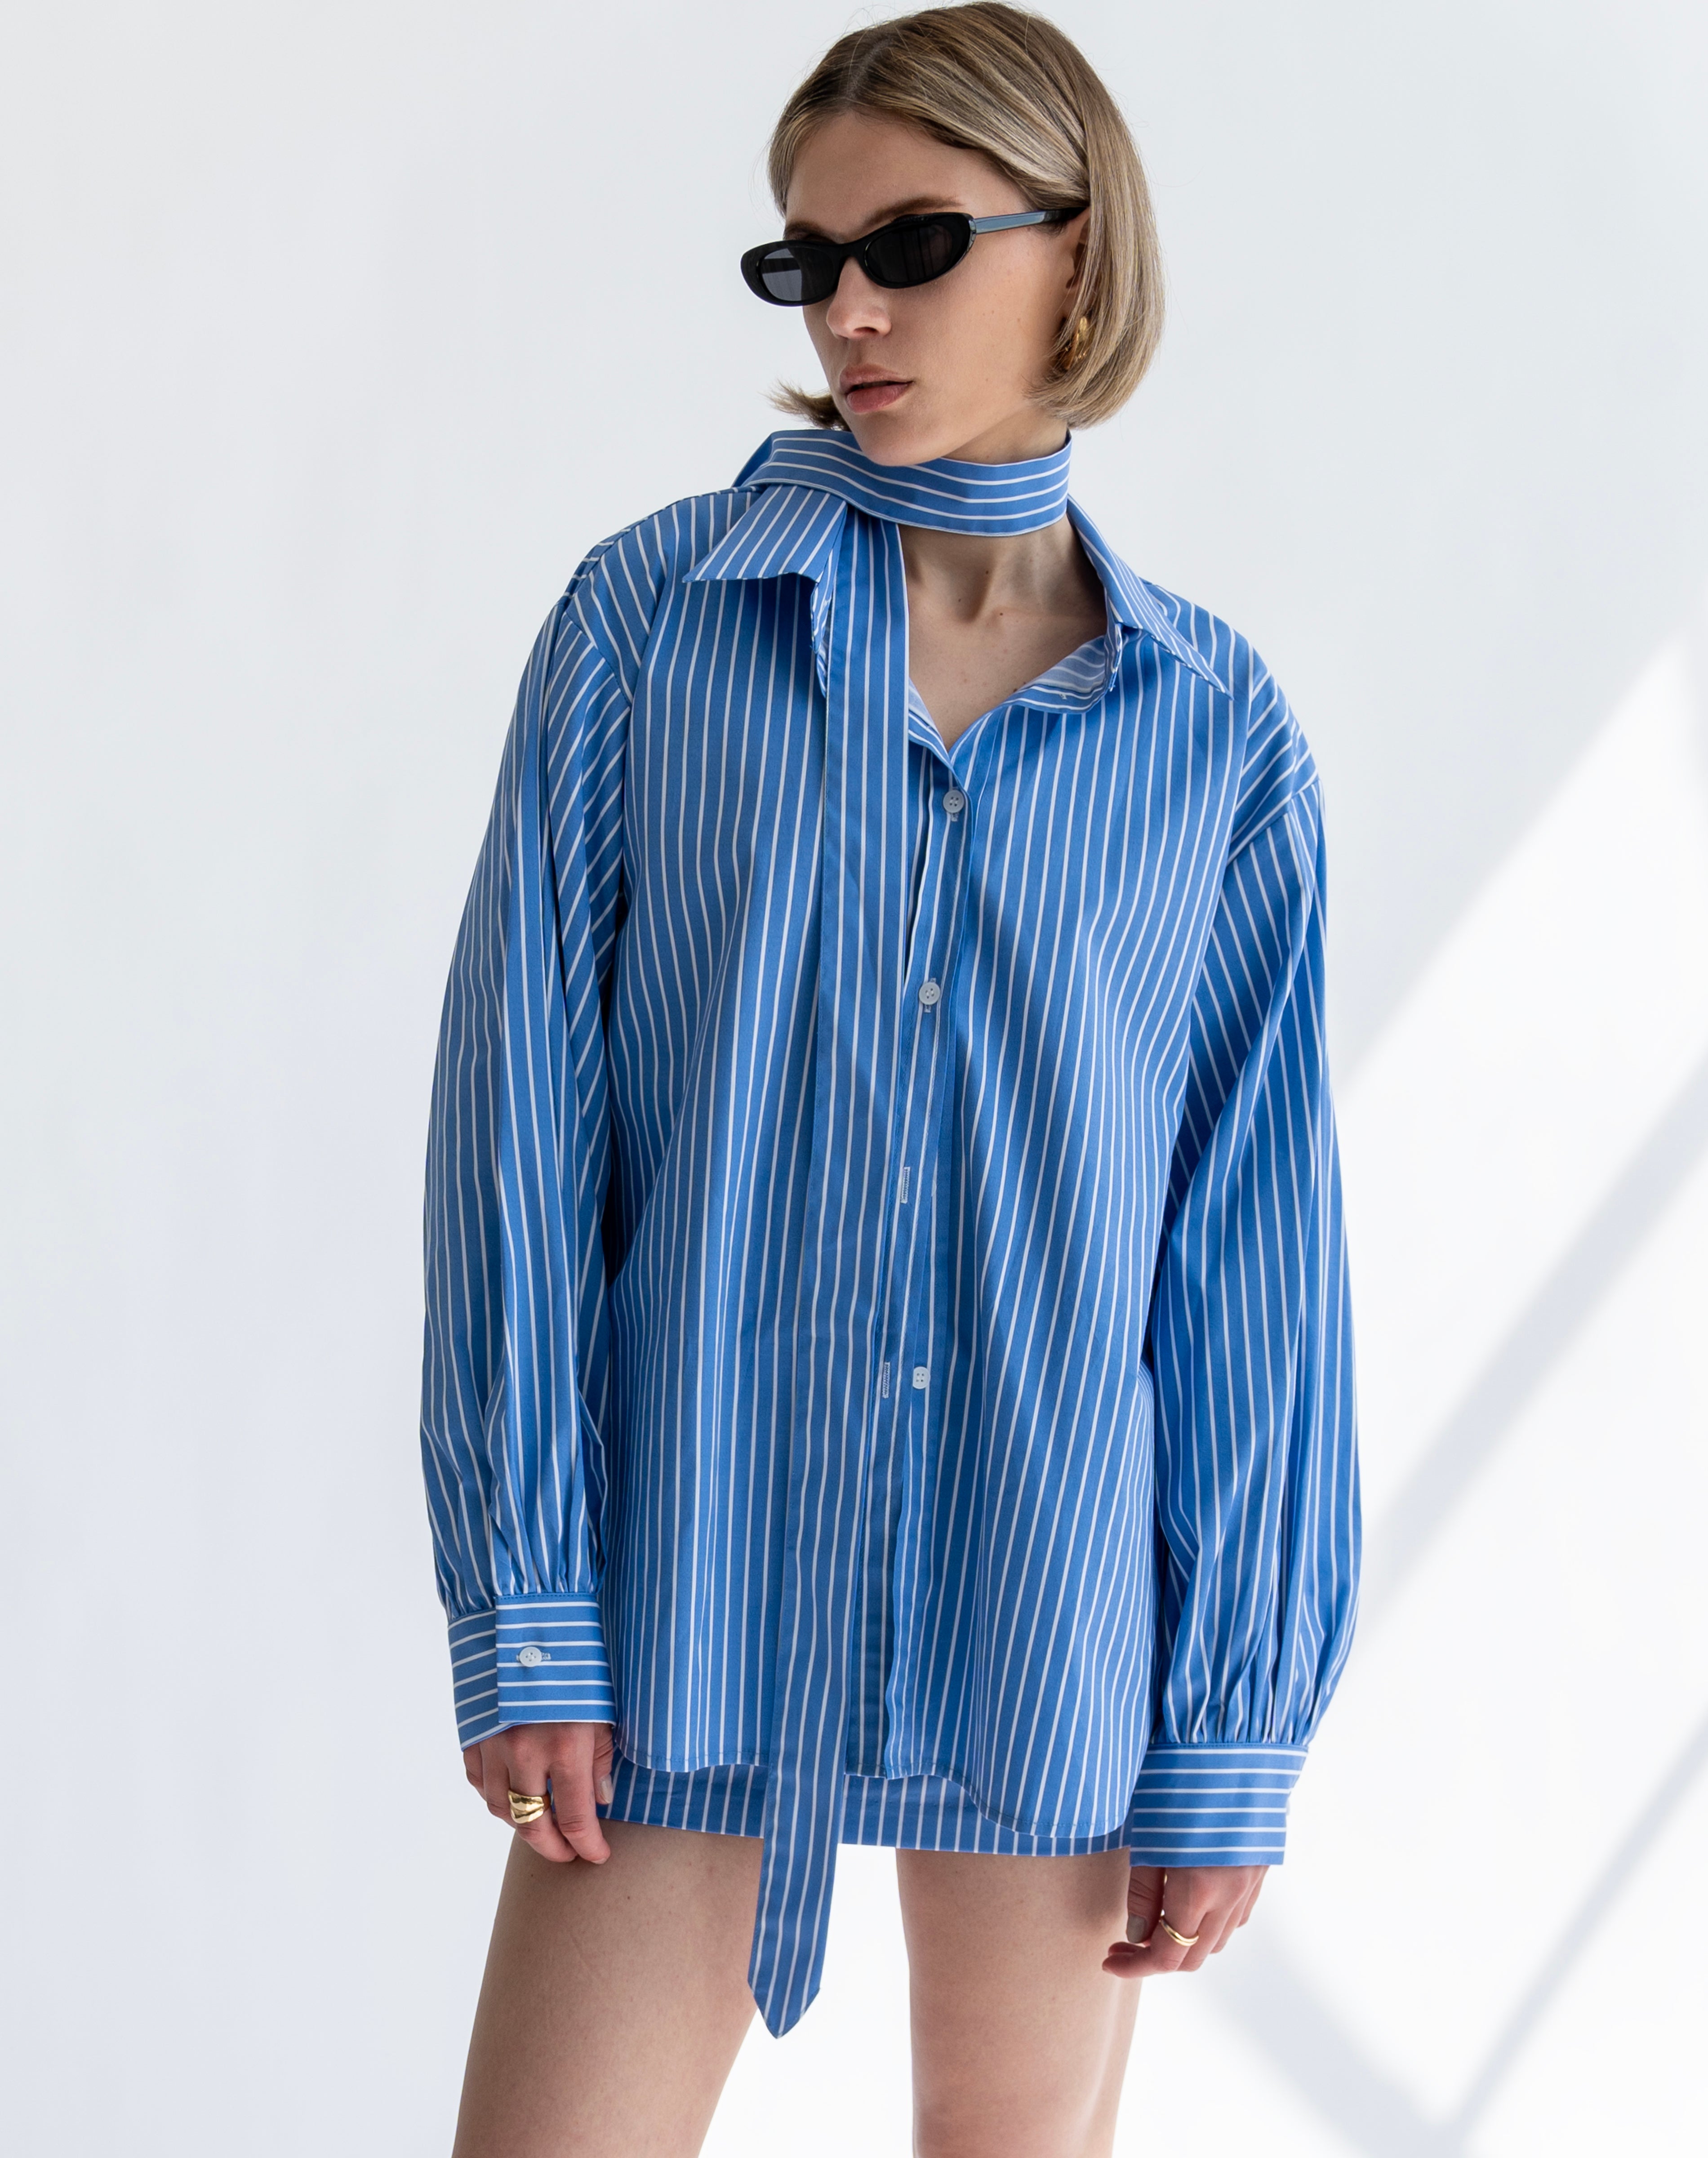 Lyla Striped Shirt With Scarf, Blue - Pre Order